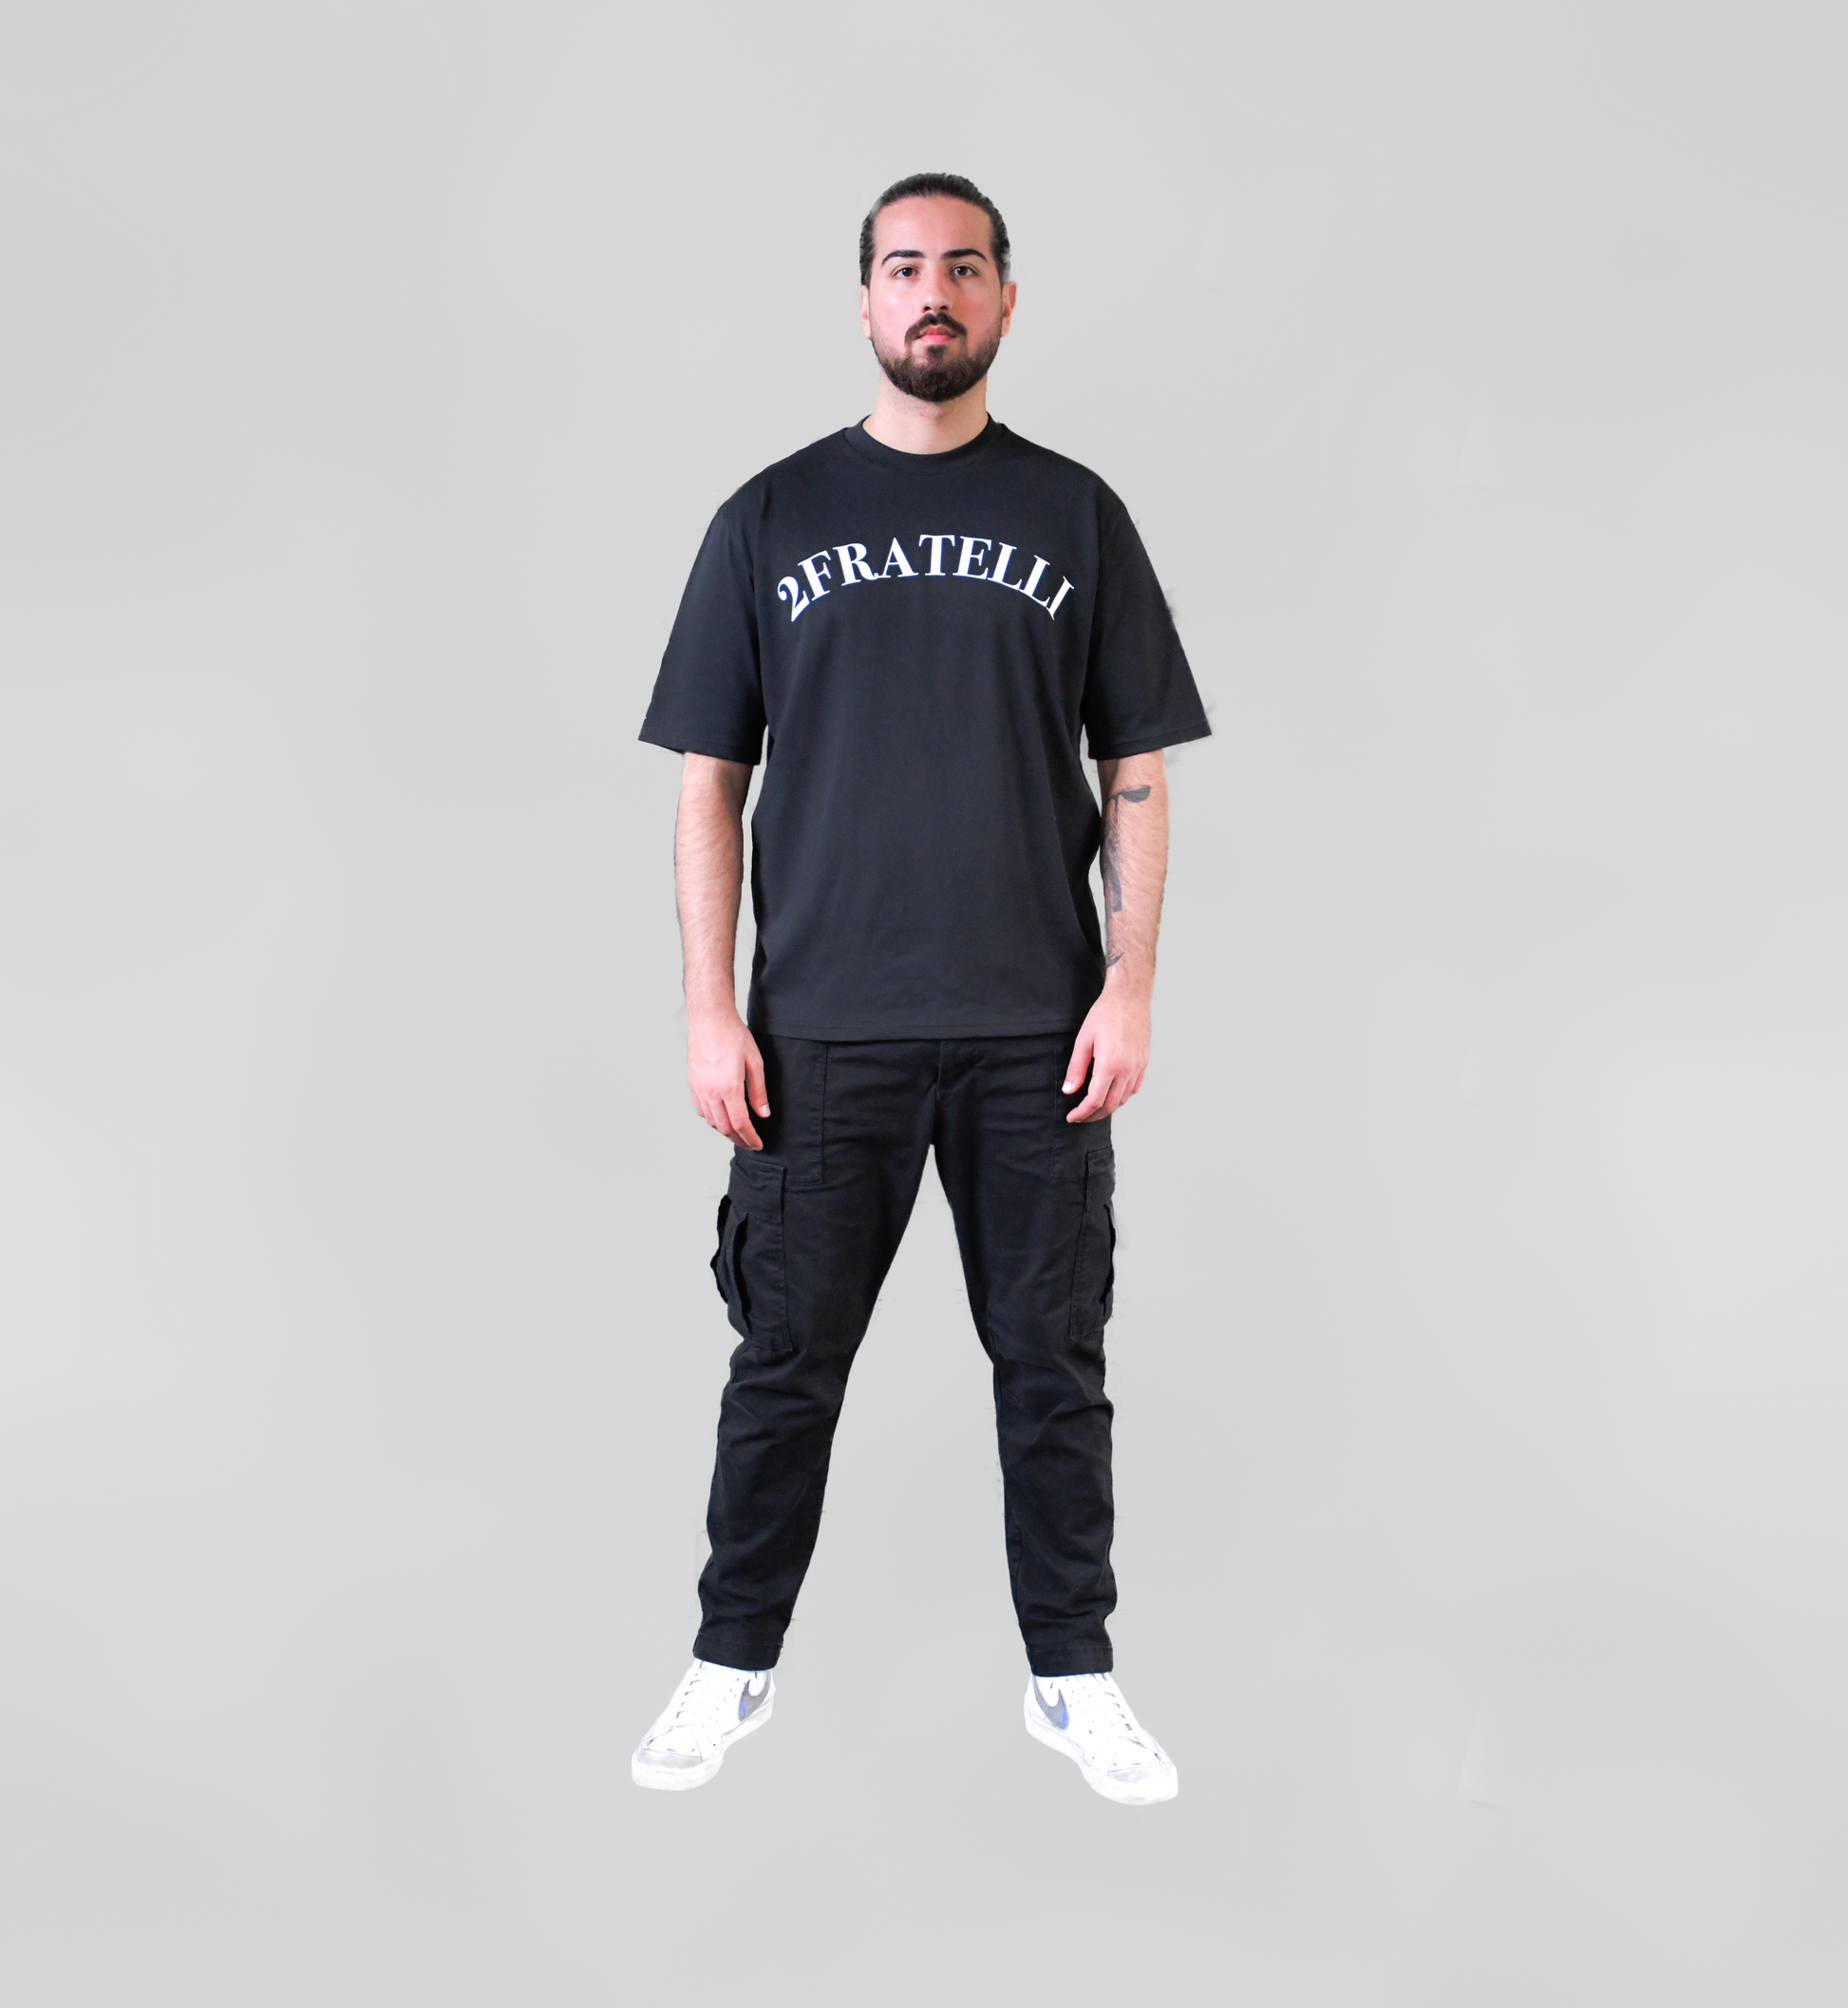 2FRATELLI Oversized front&back print T-Shirt black (unisex) - 2FRATELLI